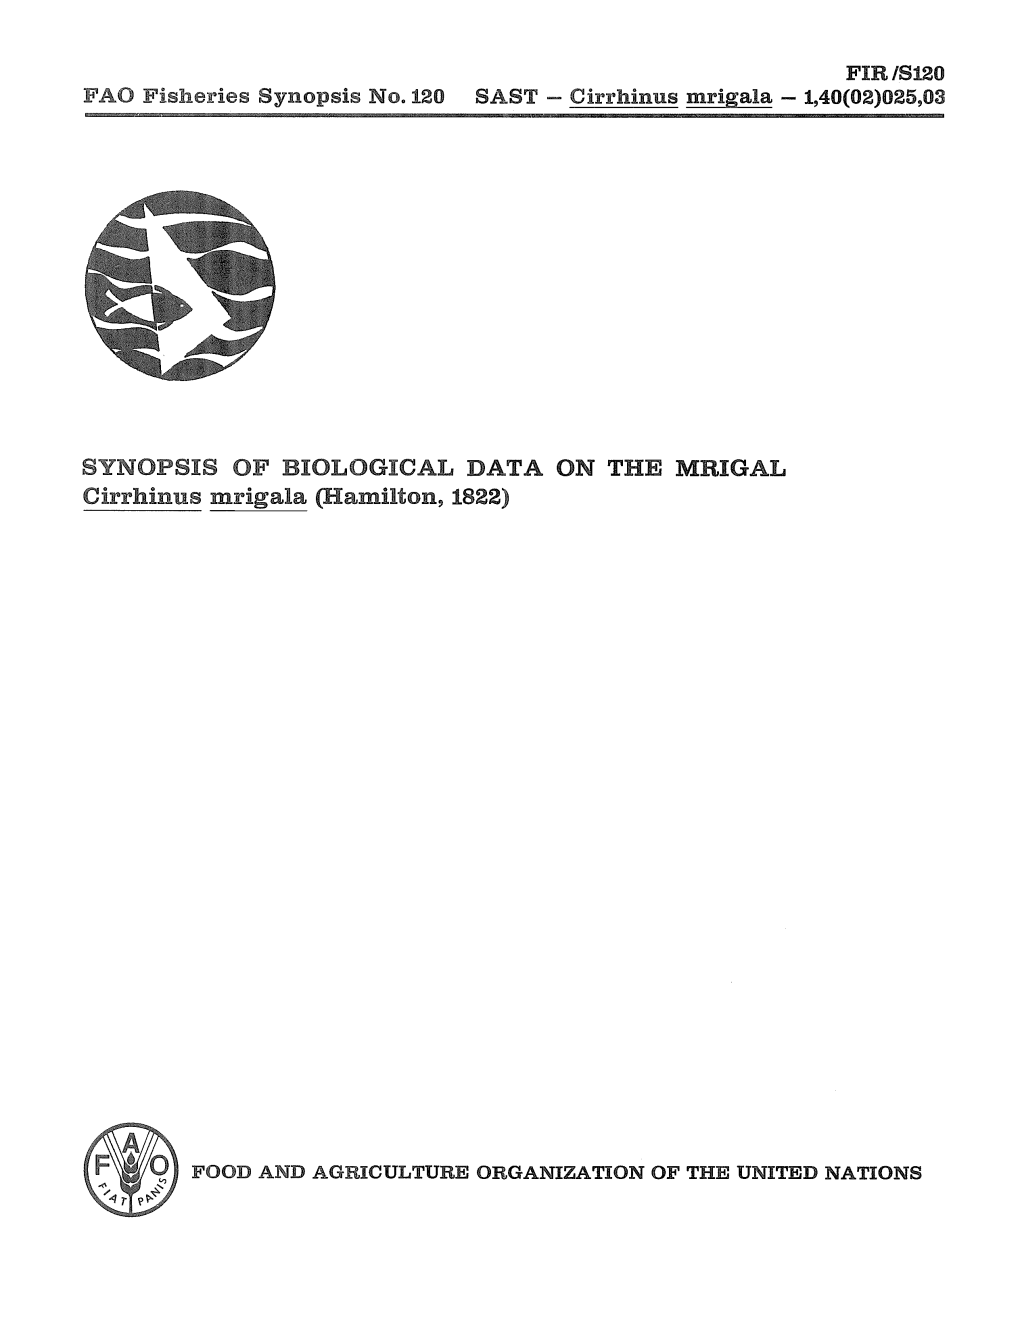 Synopsis of Biological Data on the Mrigal Cirrhinus Mrigala (Hamilton